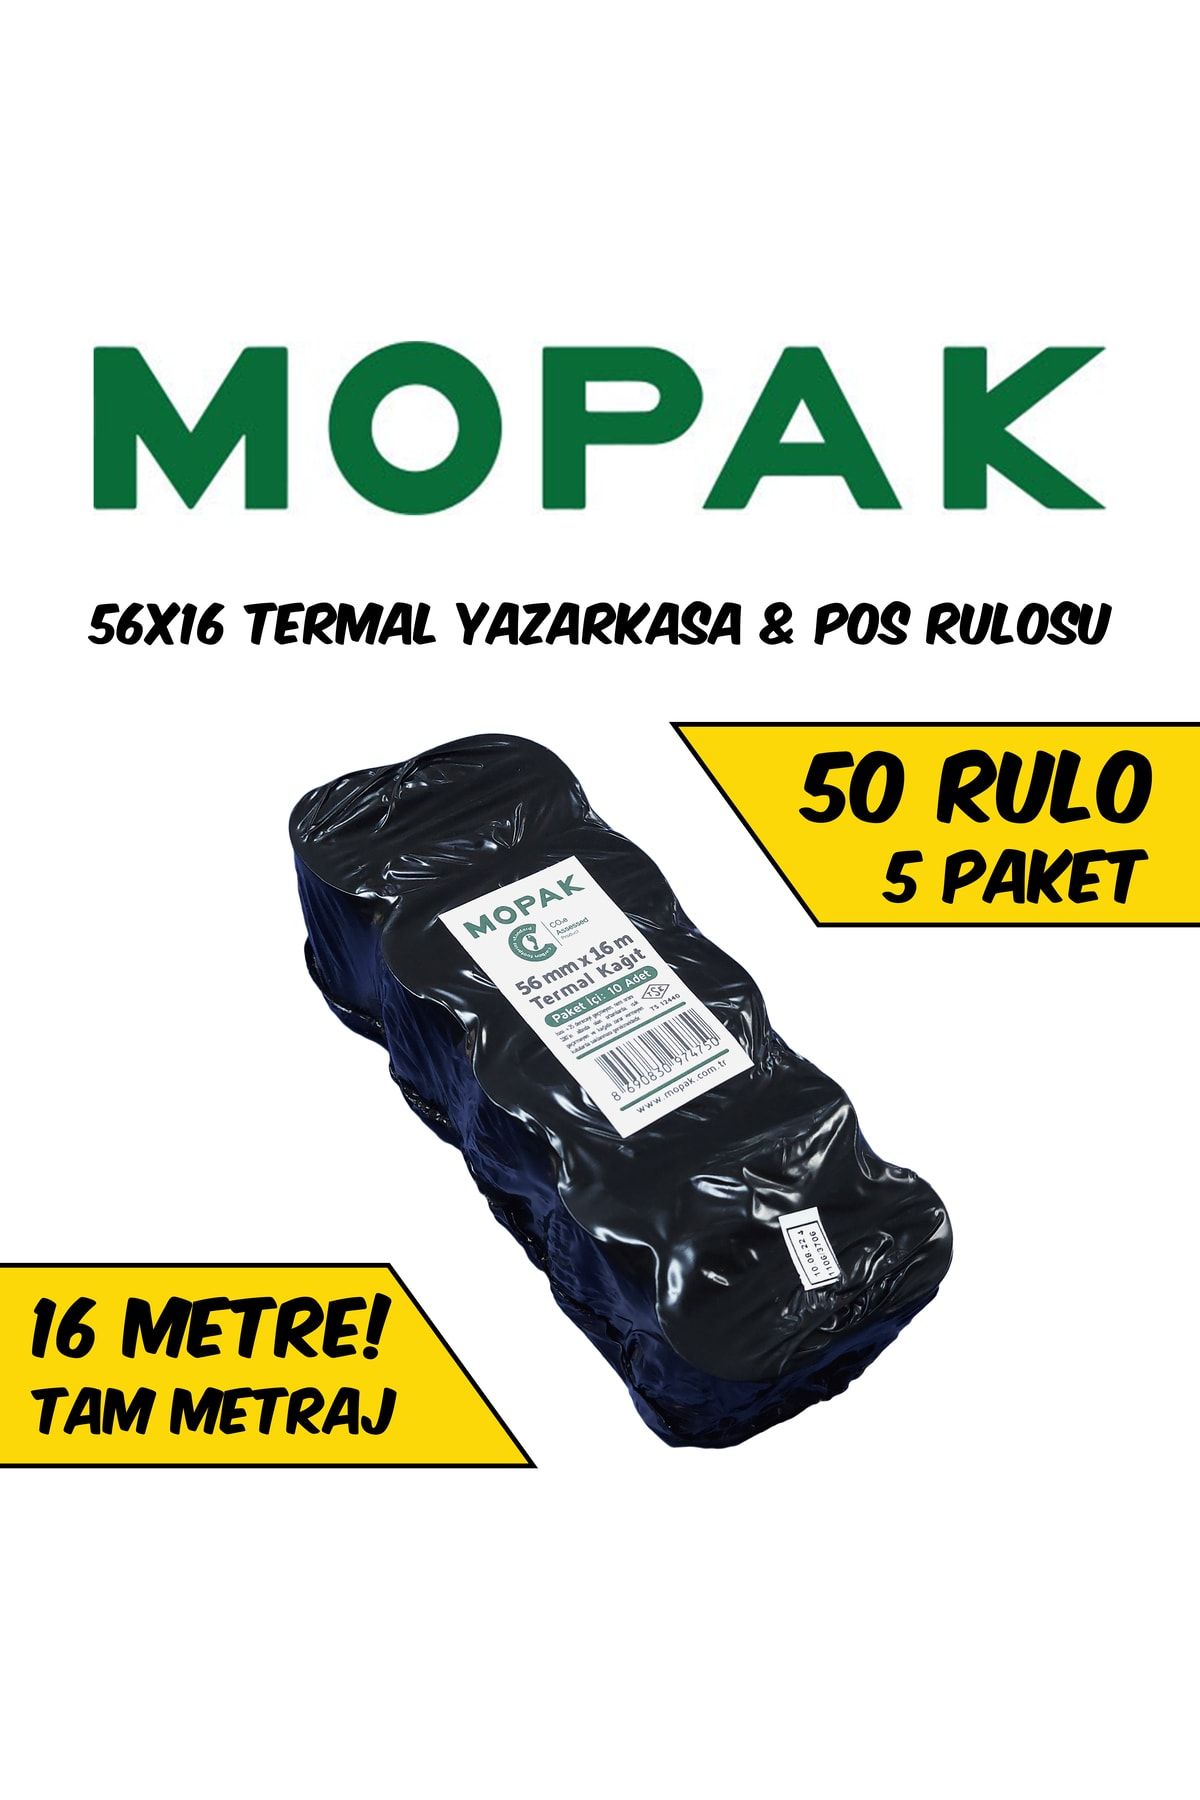 Mopak 56x16 Termal Pos & Yazarkasa Kağıdı 5 Paket (50 Rulo)